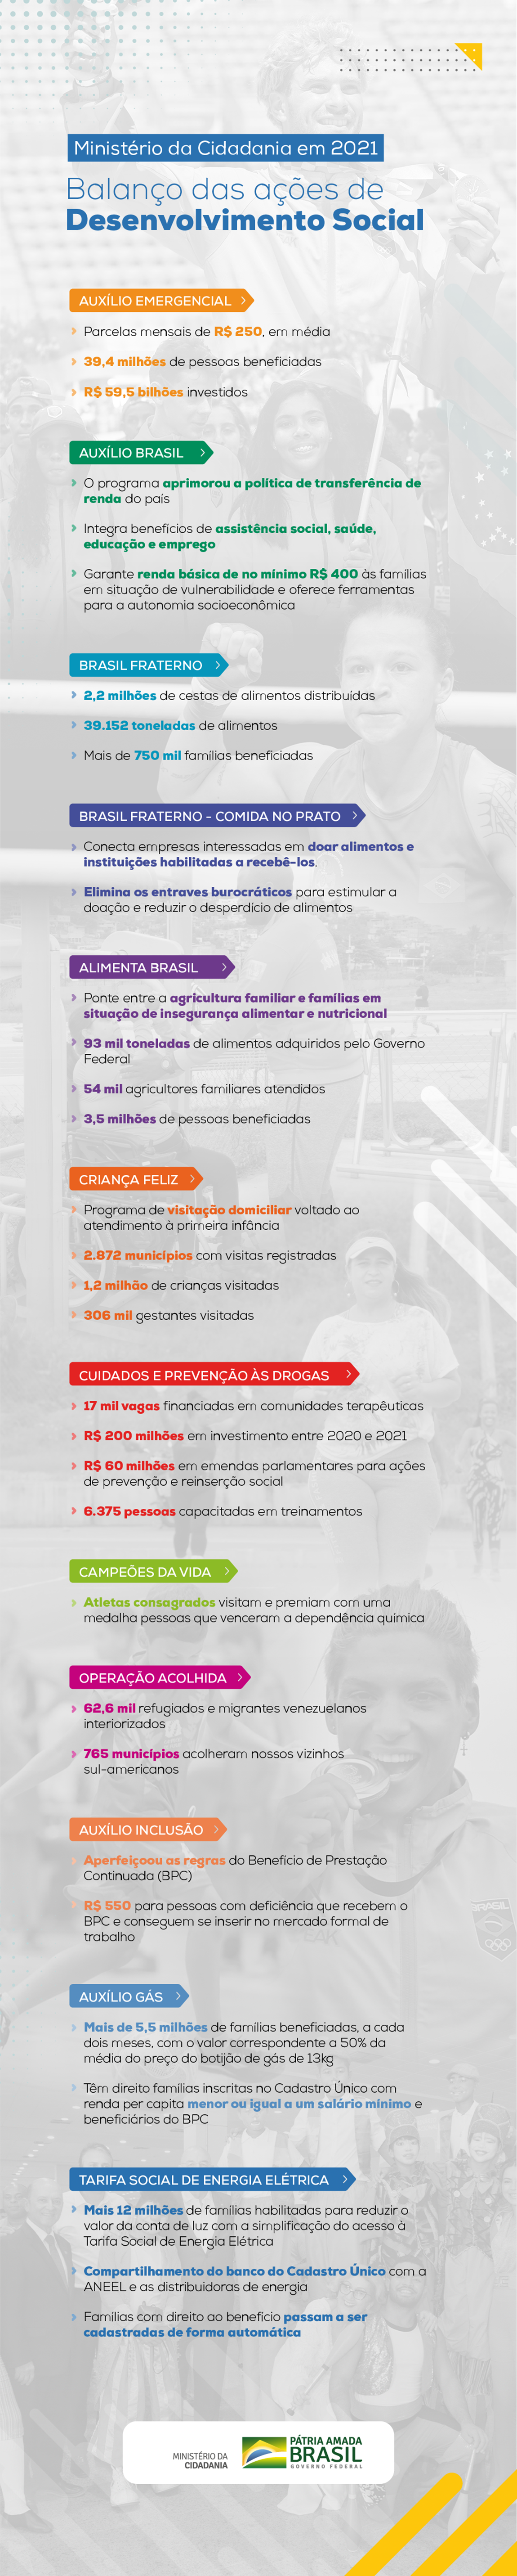 infografia_balanco_cidadania1.png